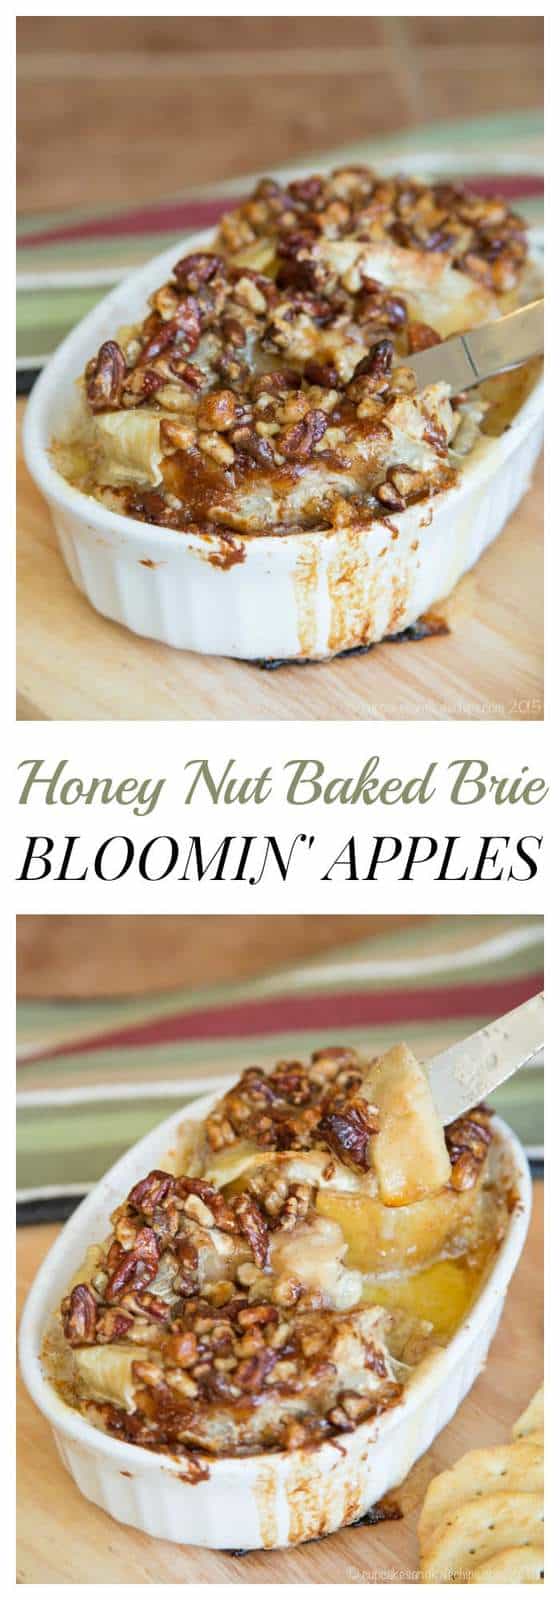 Honey Nut Baked Brie Bloomin’ Apples Appetizer - Cupcakes ... - 560 x 1600 jpeg 61kB